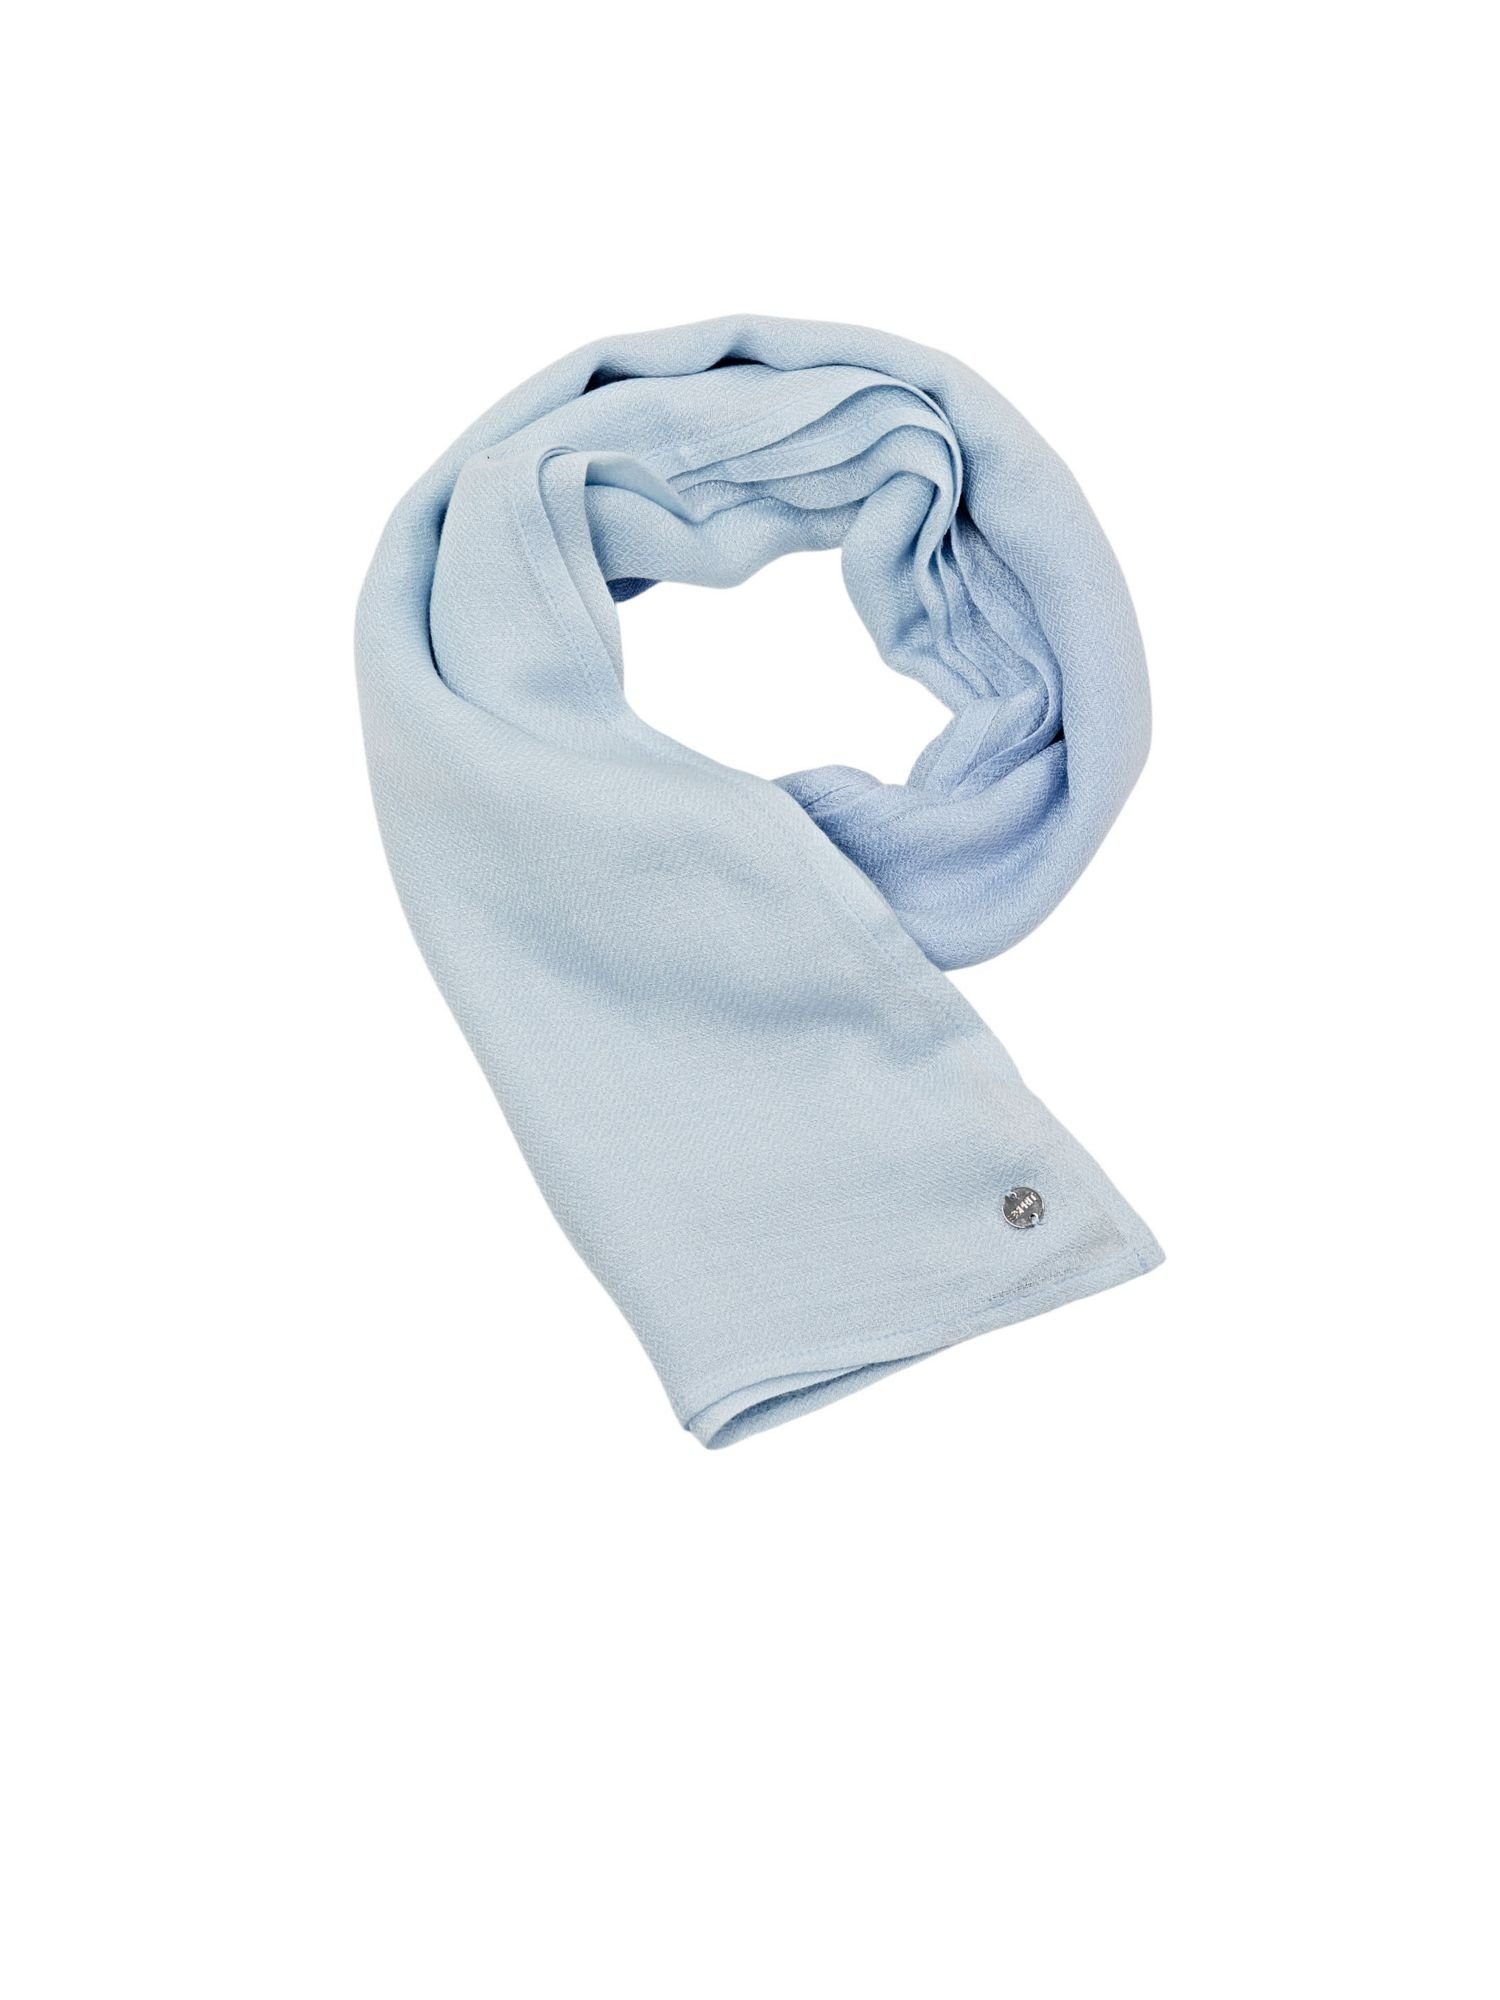 Esprit Modeschal Schal mit Ombré-Effekt PASTEL BLUE